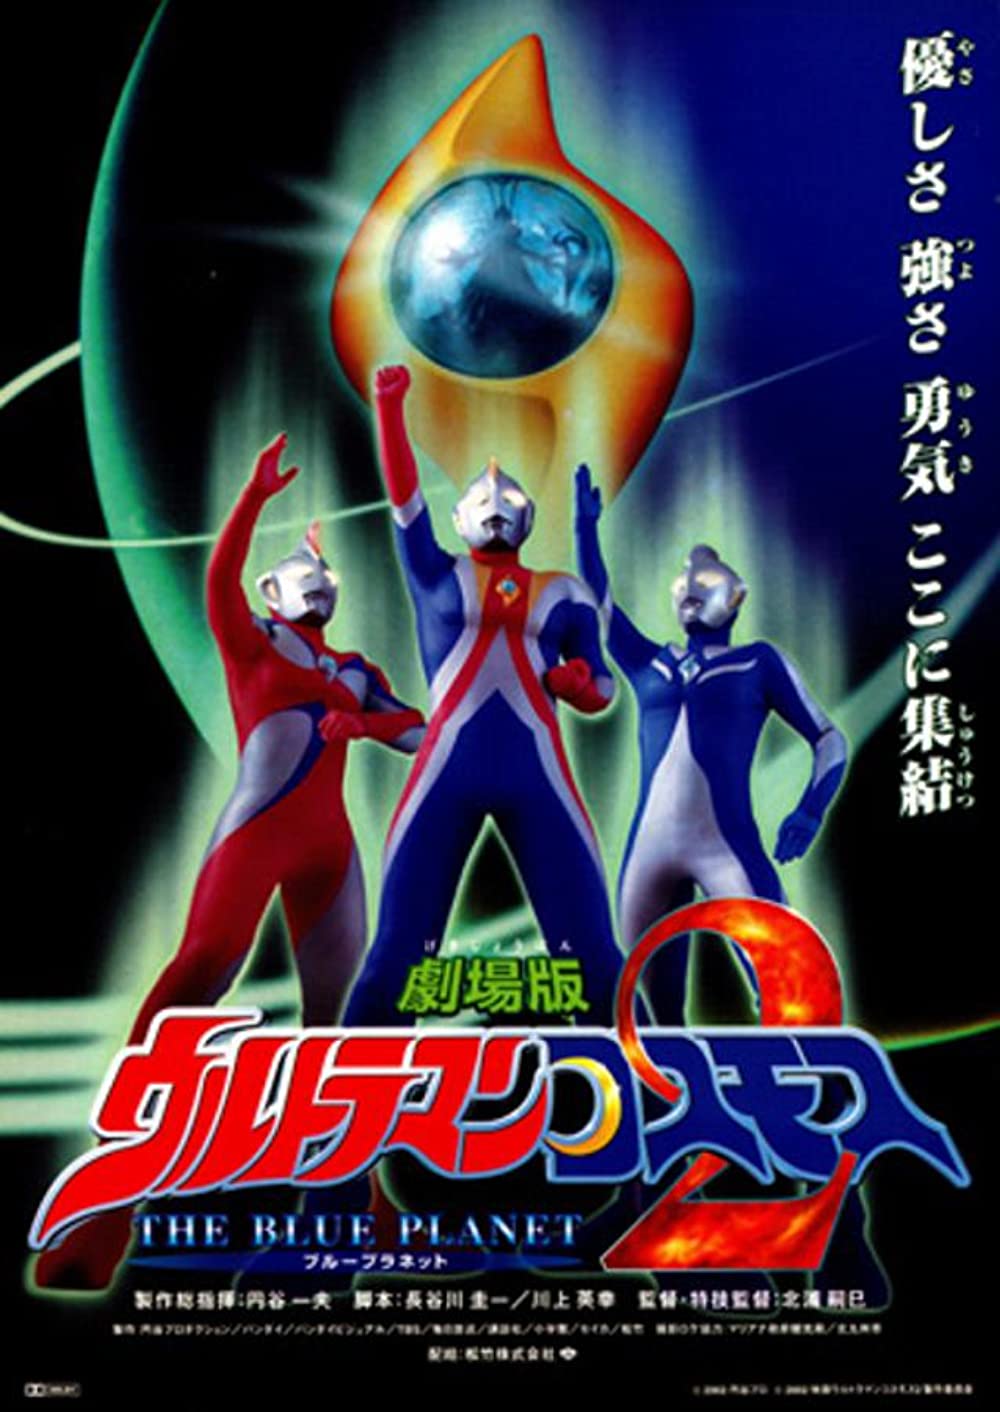 Download Urutoraman Kosumosu 2: The Blue Planet Movie | Urutoraman Kosumosu 2: The Blue Planet